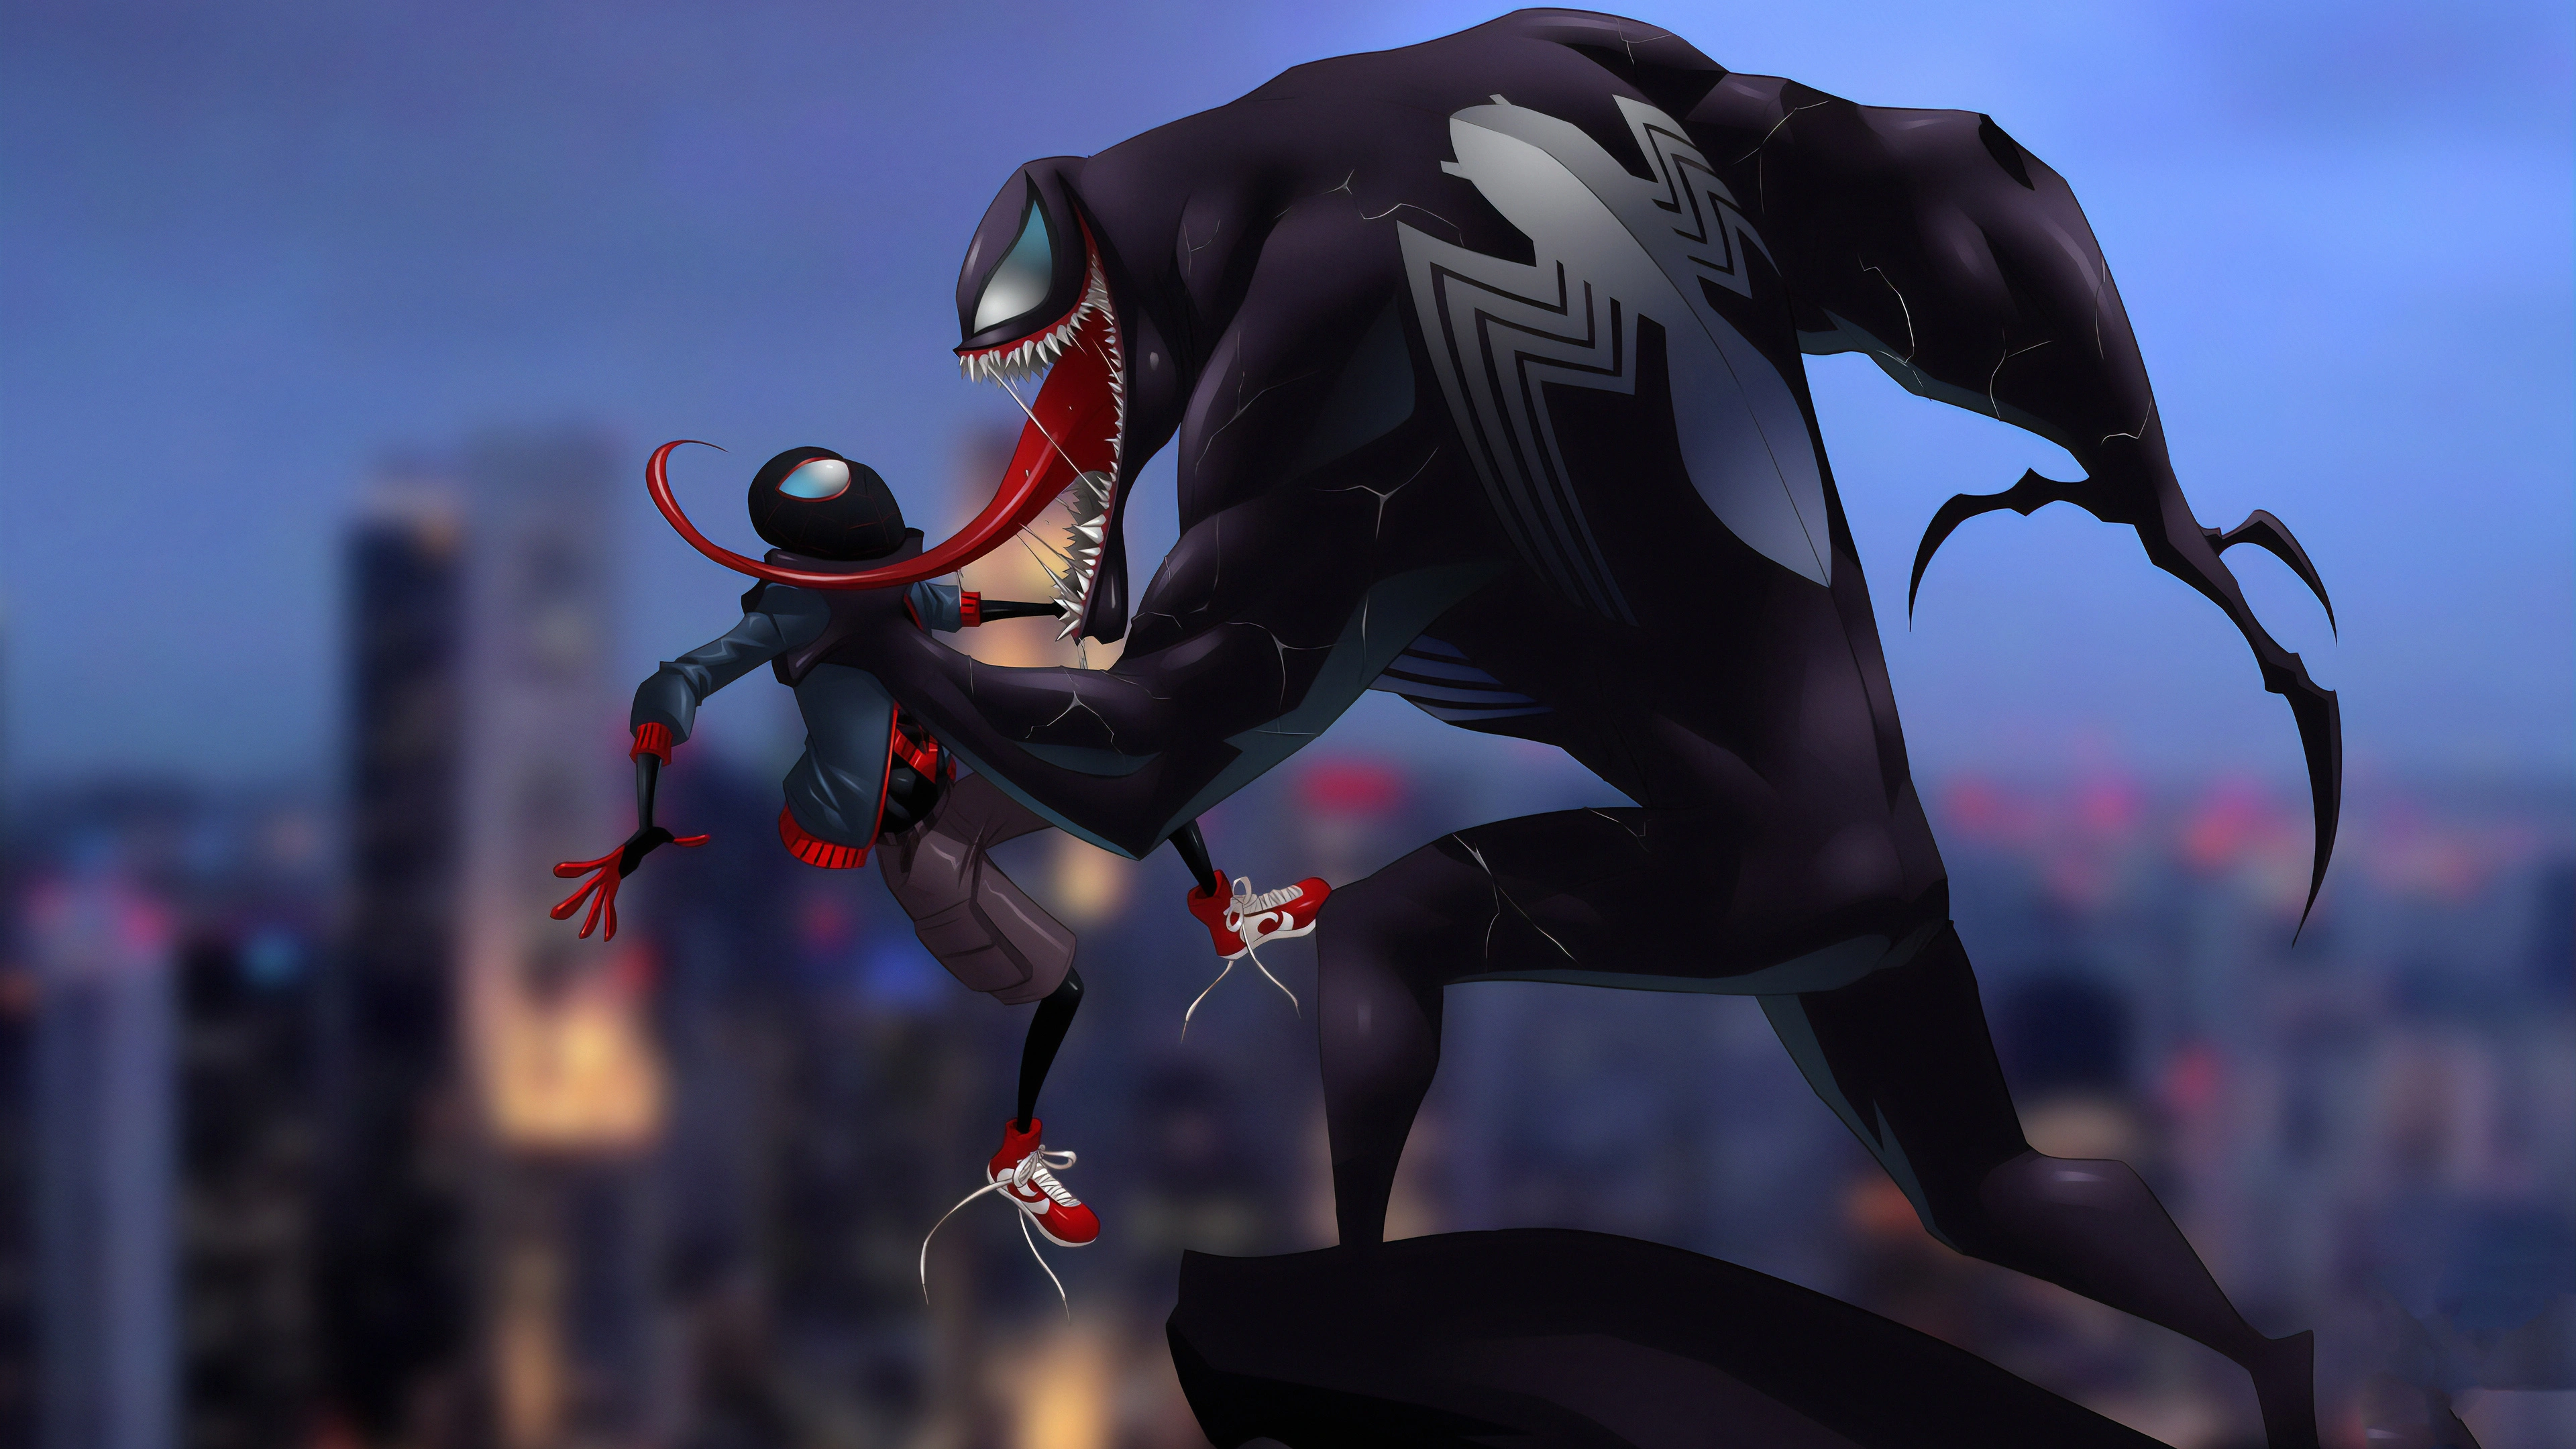 spider man and venom 1572368578 - Spider Man And Venom - Venom wallpapers, supervillain wallpapers, superheroes wallpapers, spiderman wallpapers, hd-wallpapers, 4k-wallpapers